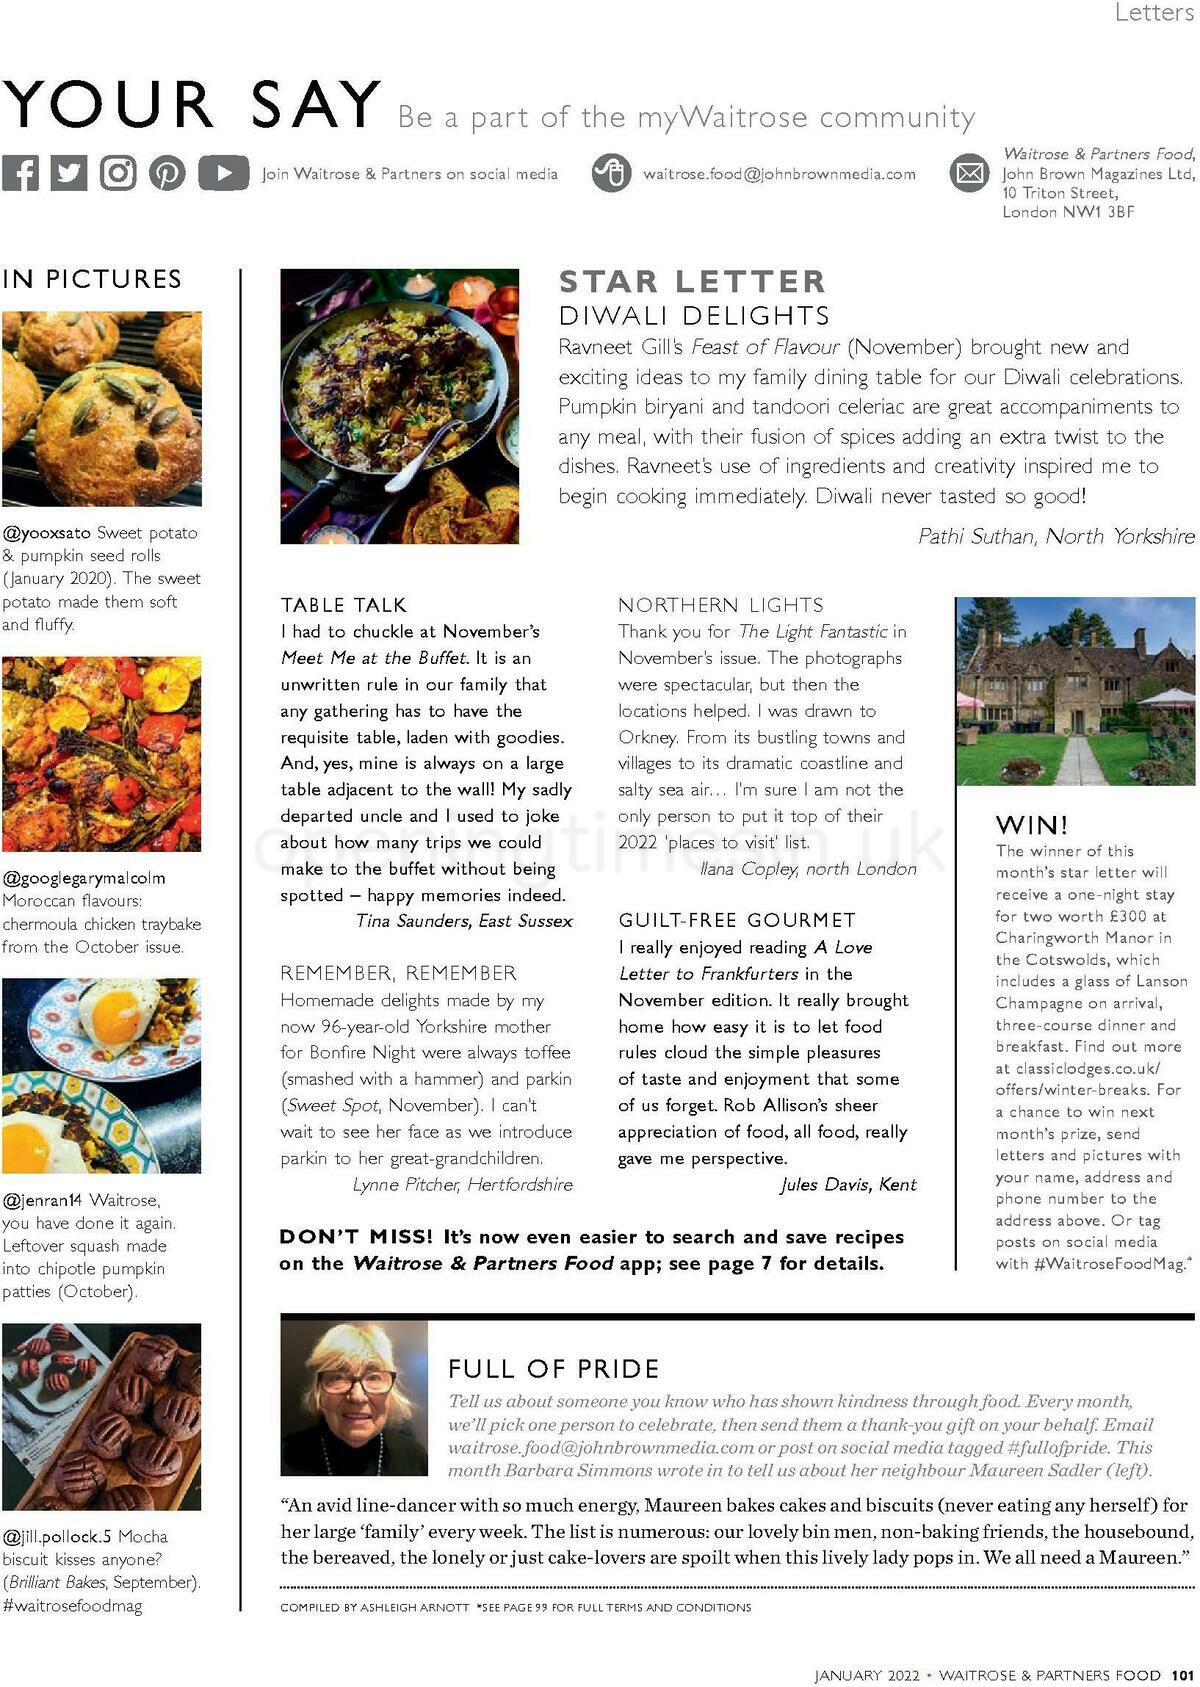 Waitrose Food Magazine January Offers from 1 January